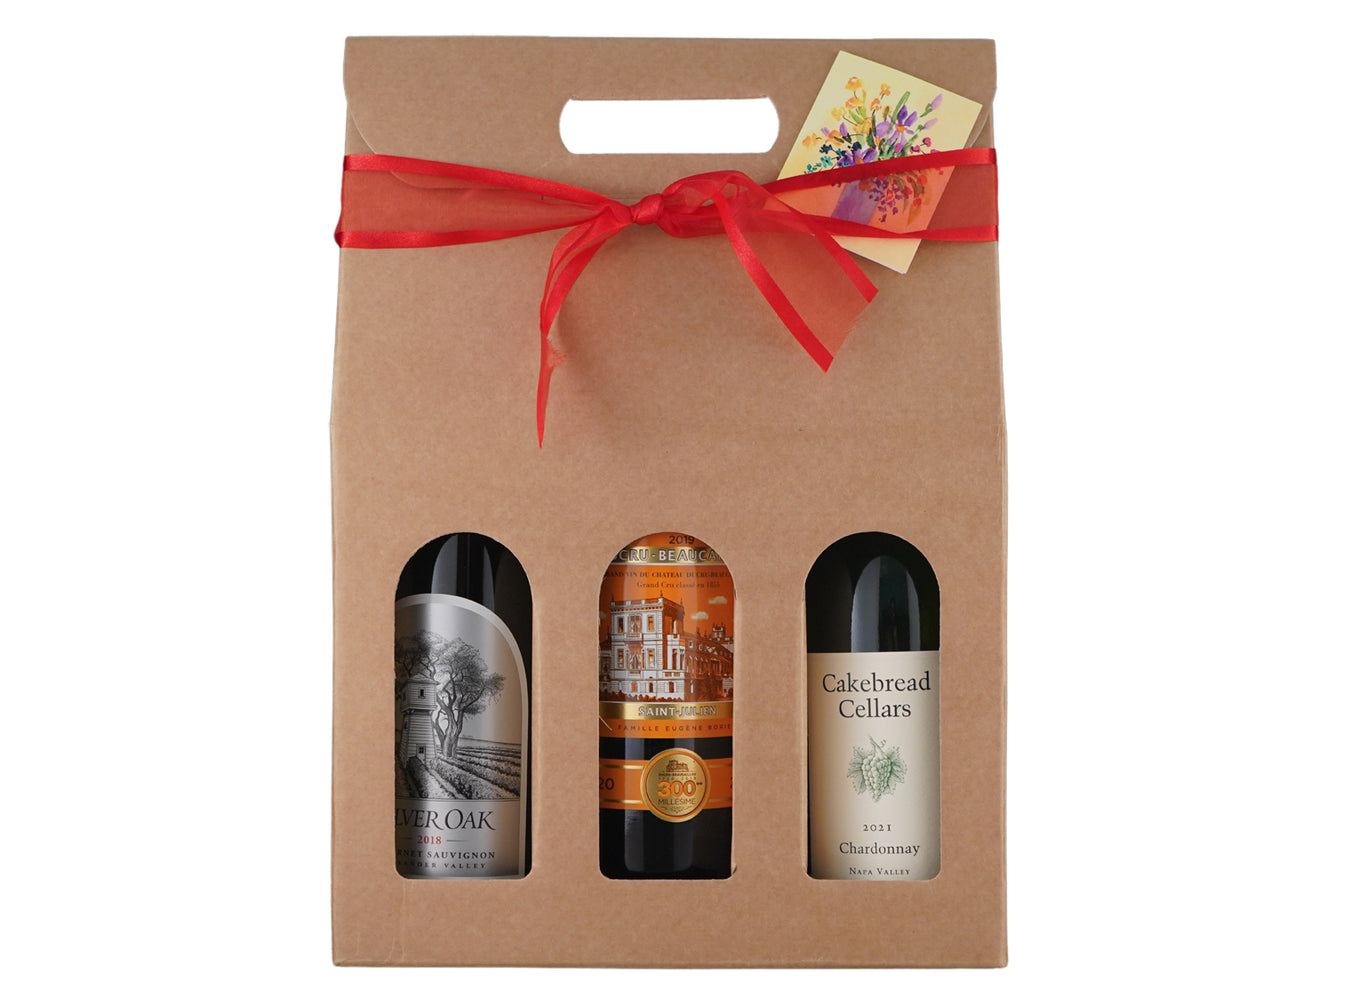 Wine Gift Packs